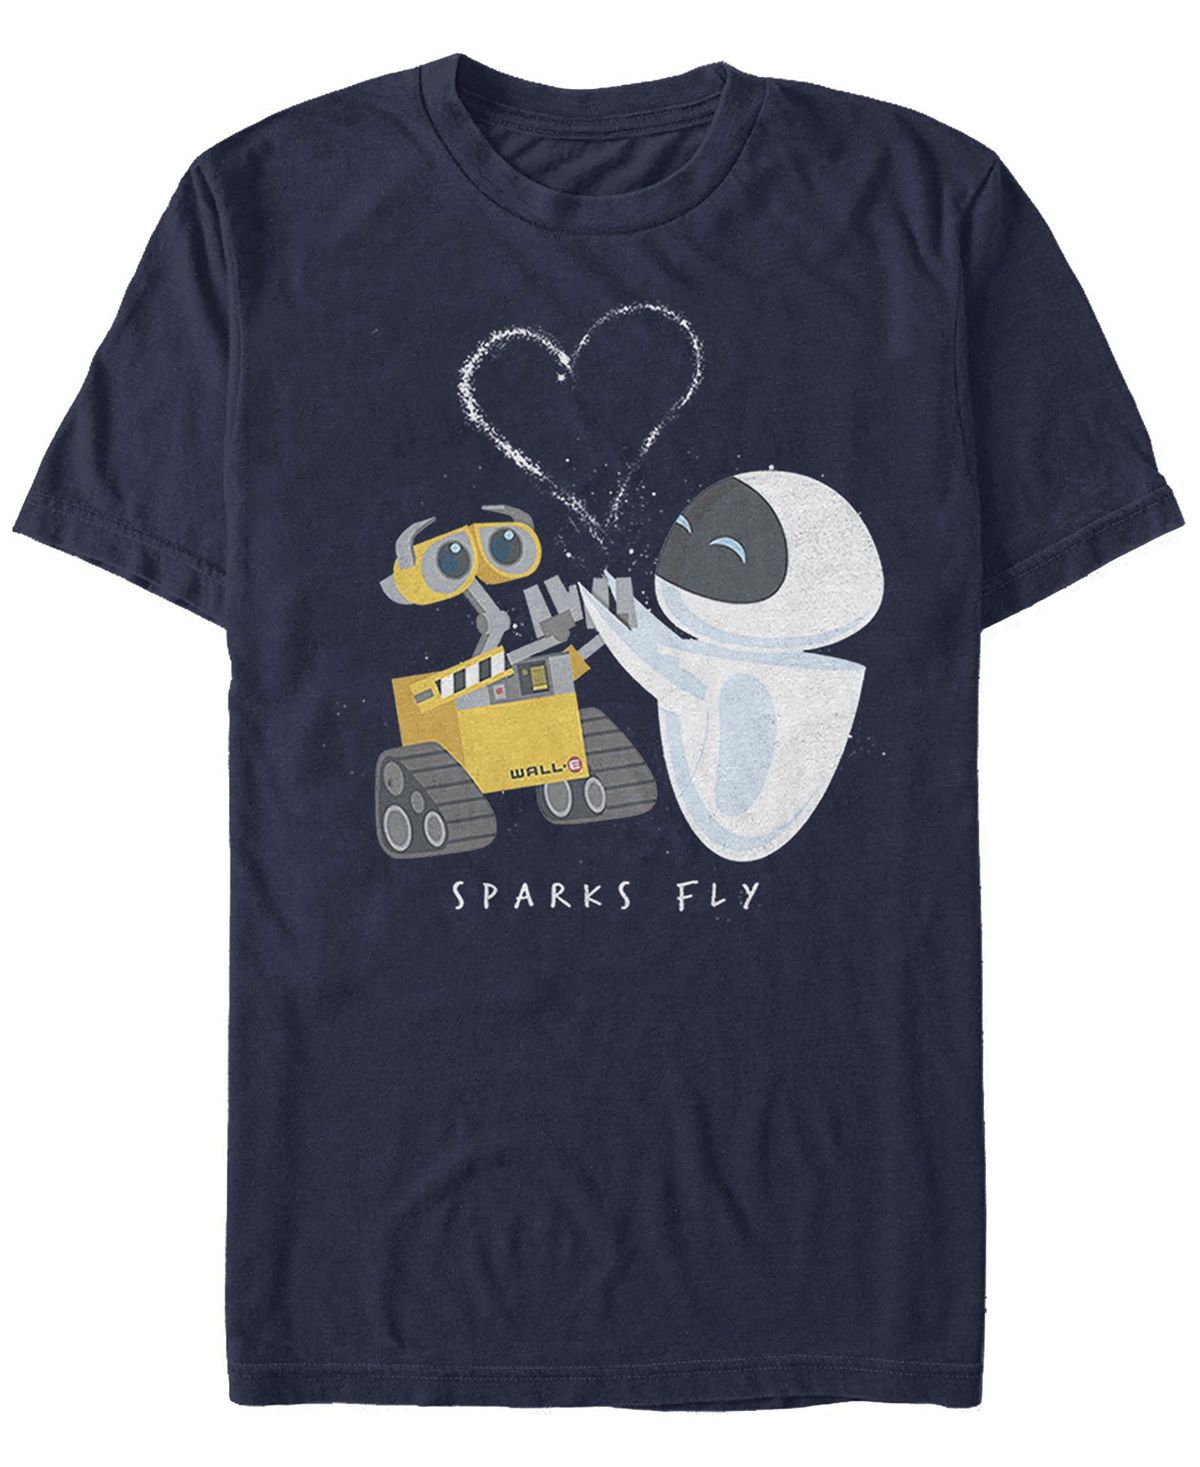 disney wall e level 5 Мужская футболка с короткими рукавами и круглым вырезом Sparks Fly Fifth Sun